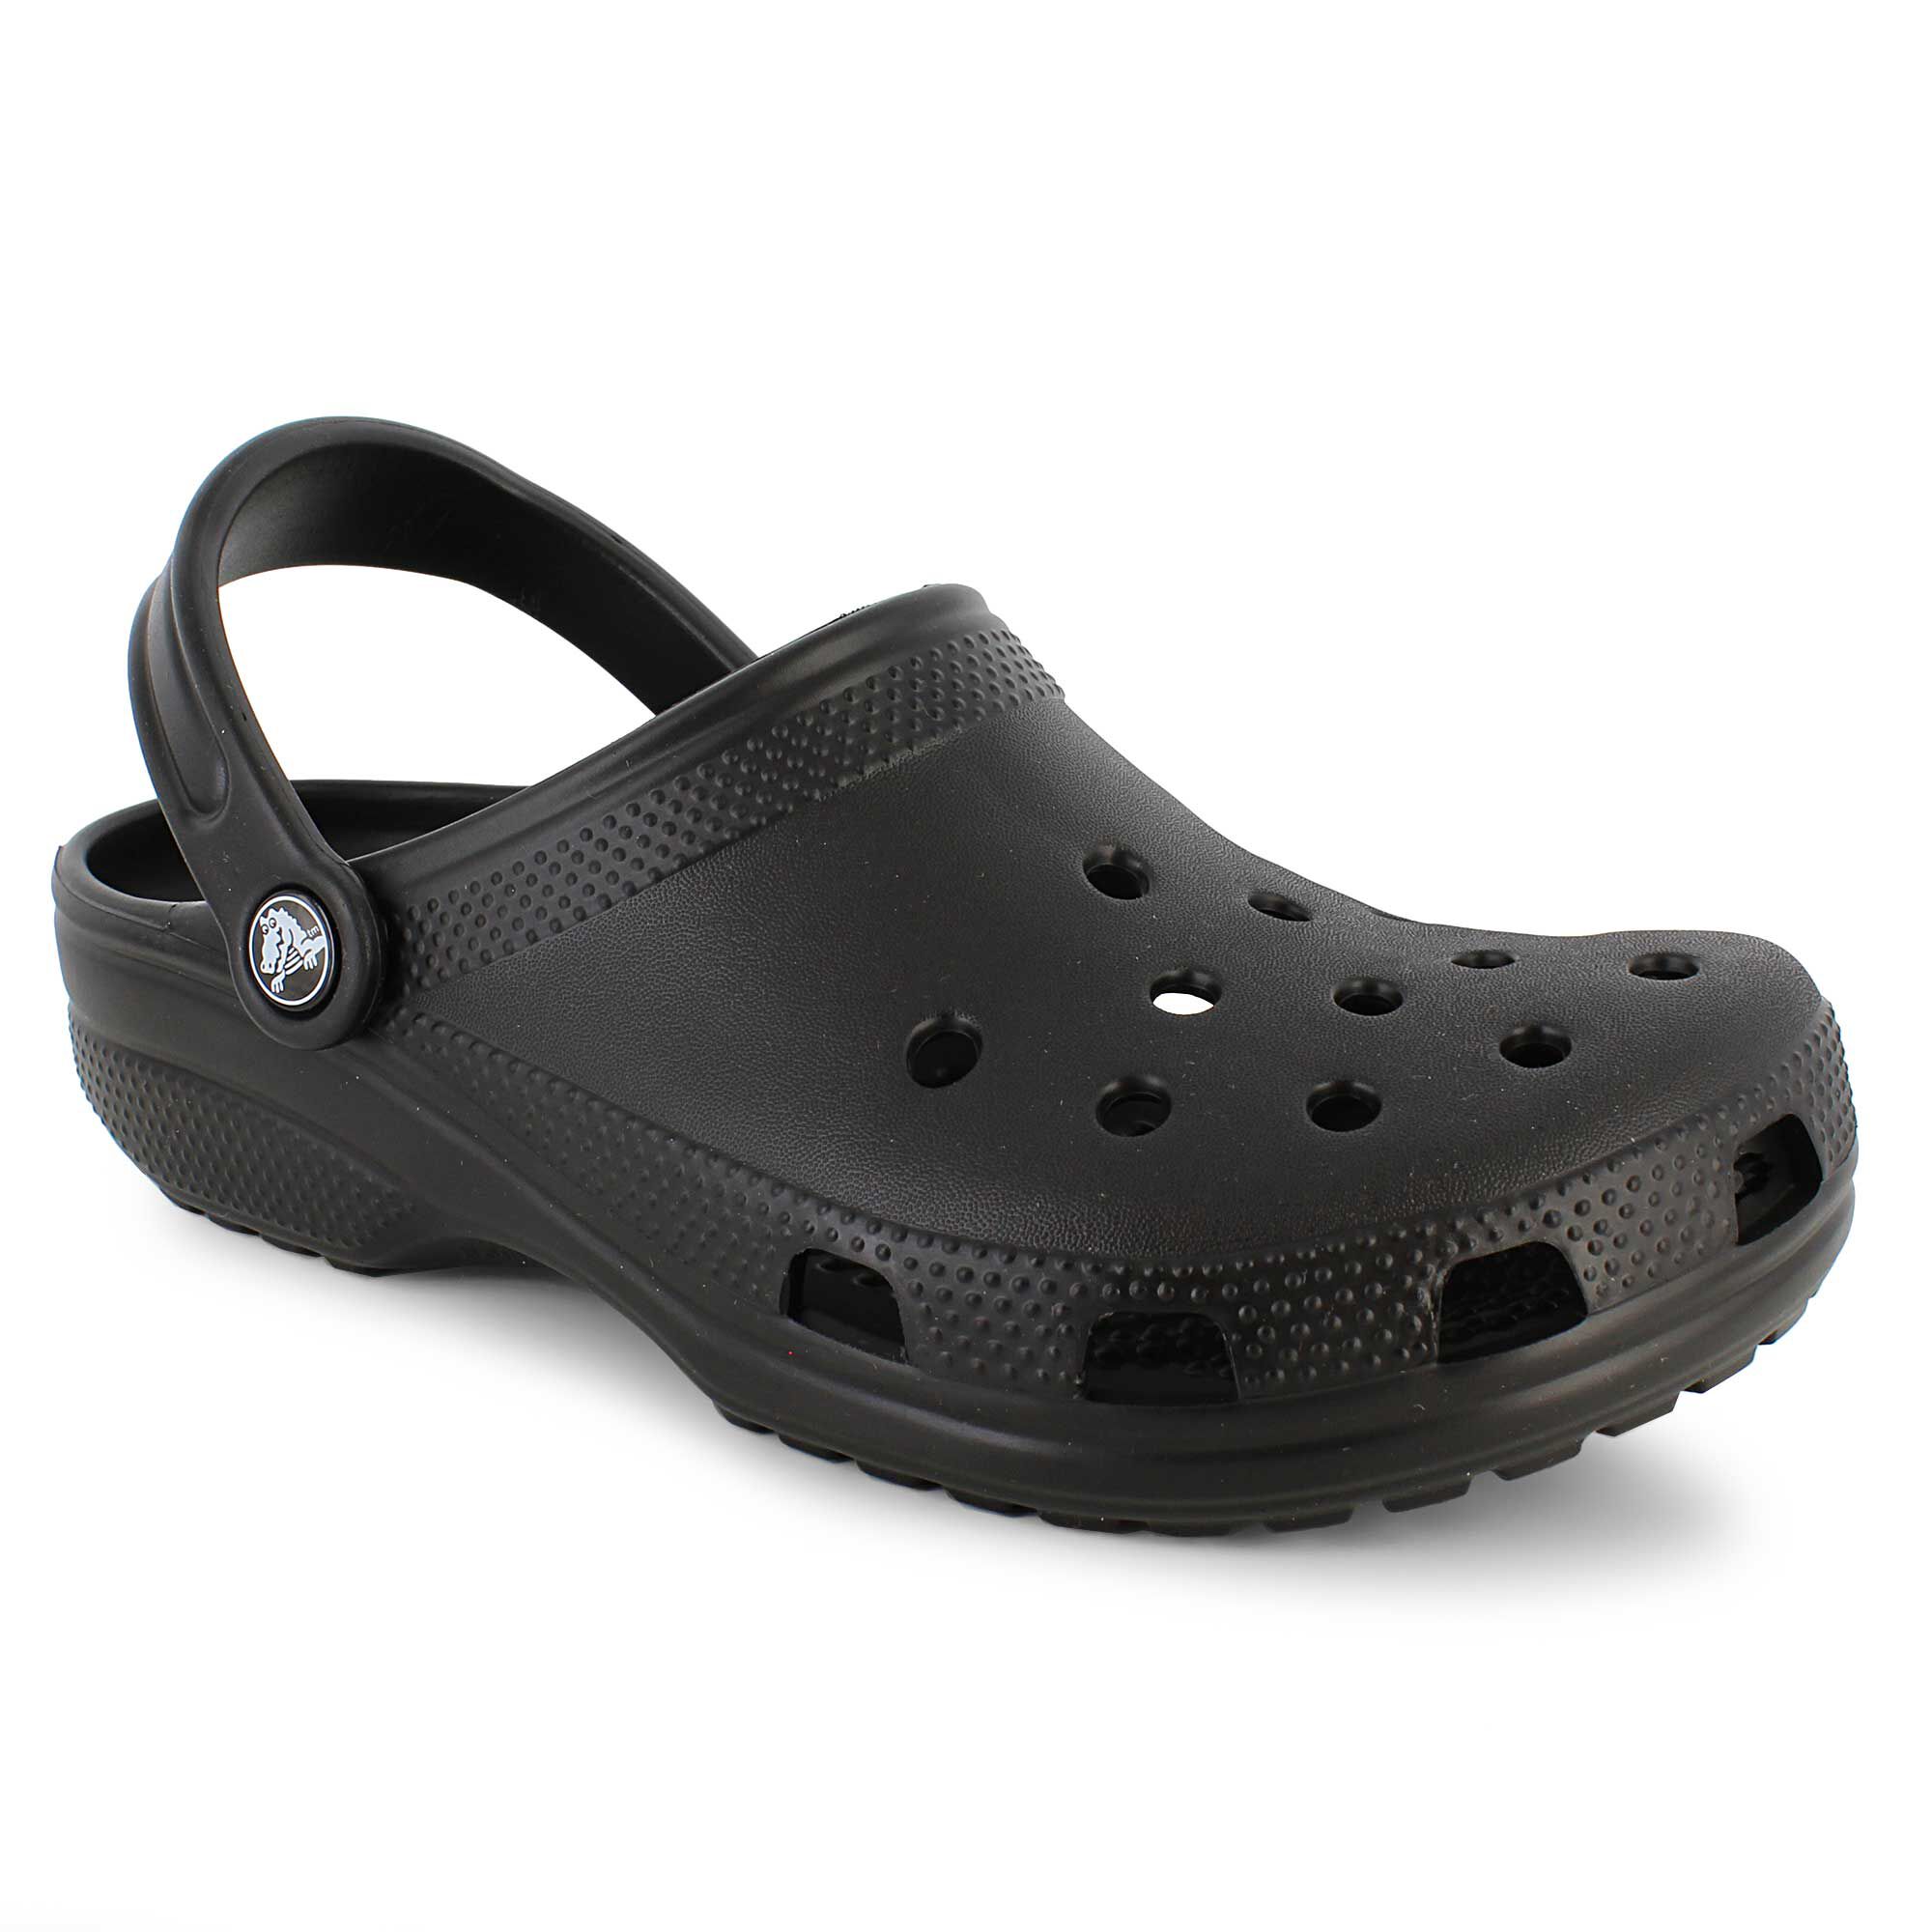 shoe department crocs